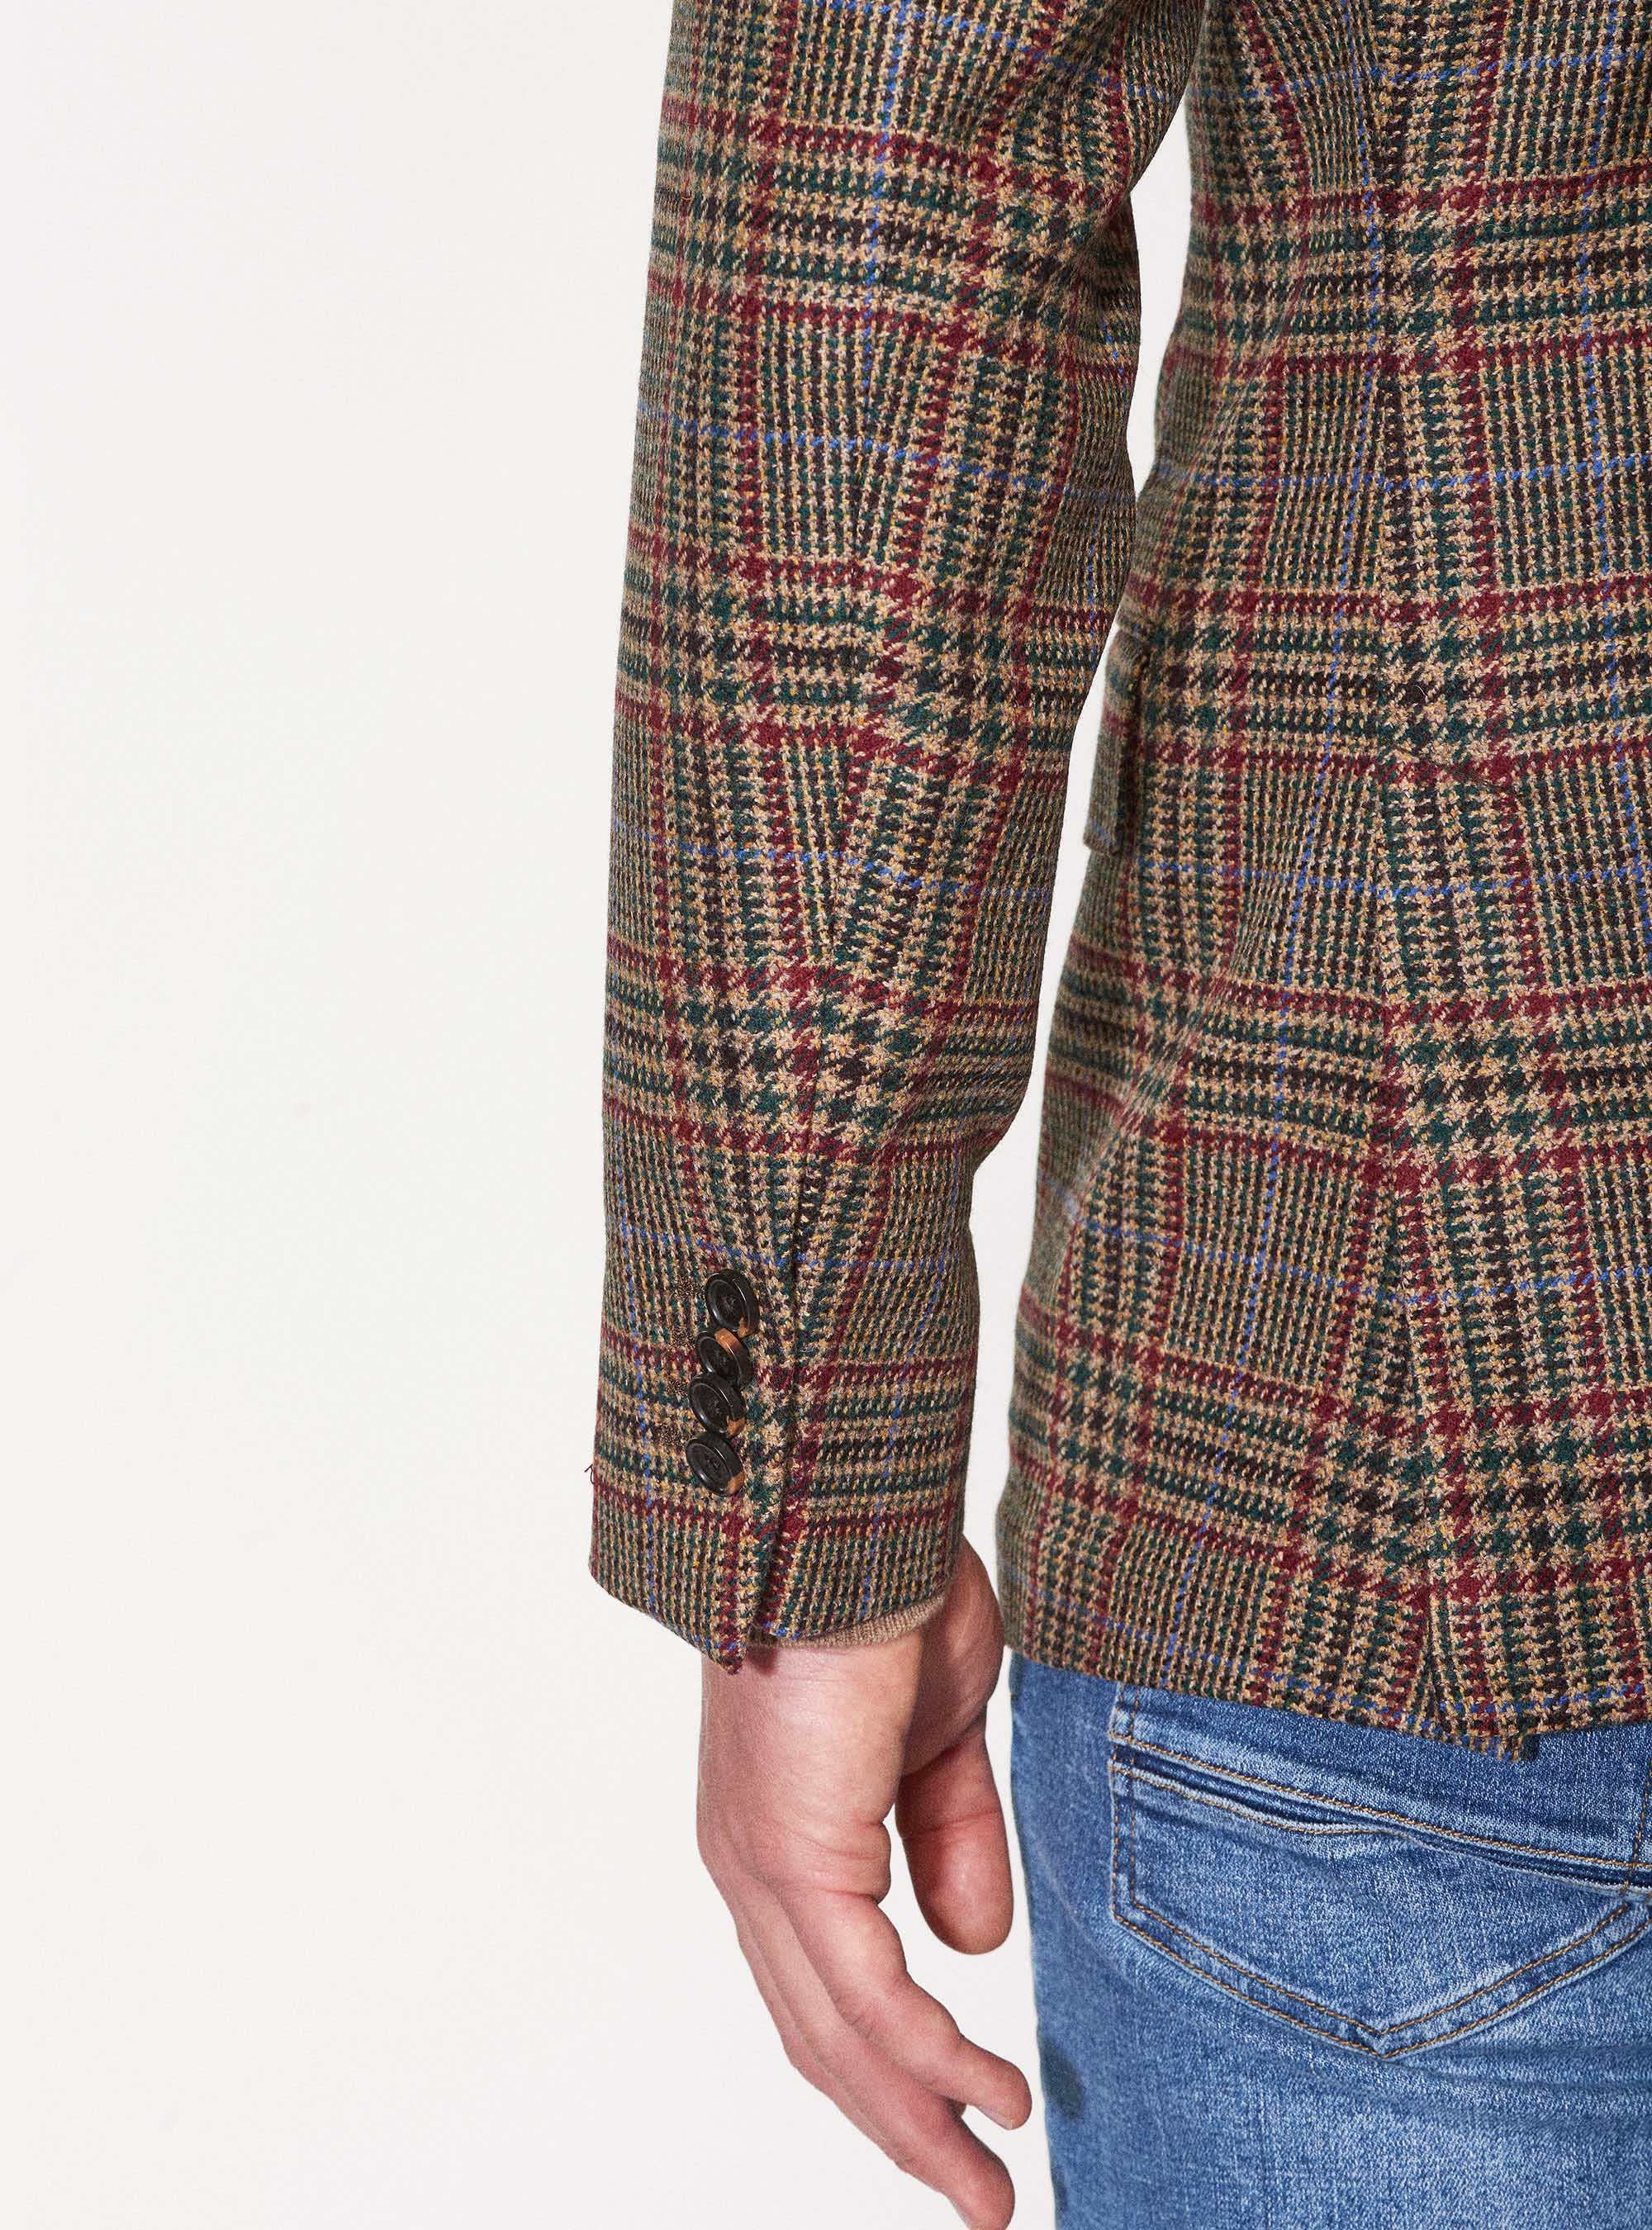 Giacca a quadri in lana cashmere | Gutteridge | Giacche Uomo